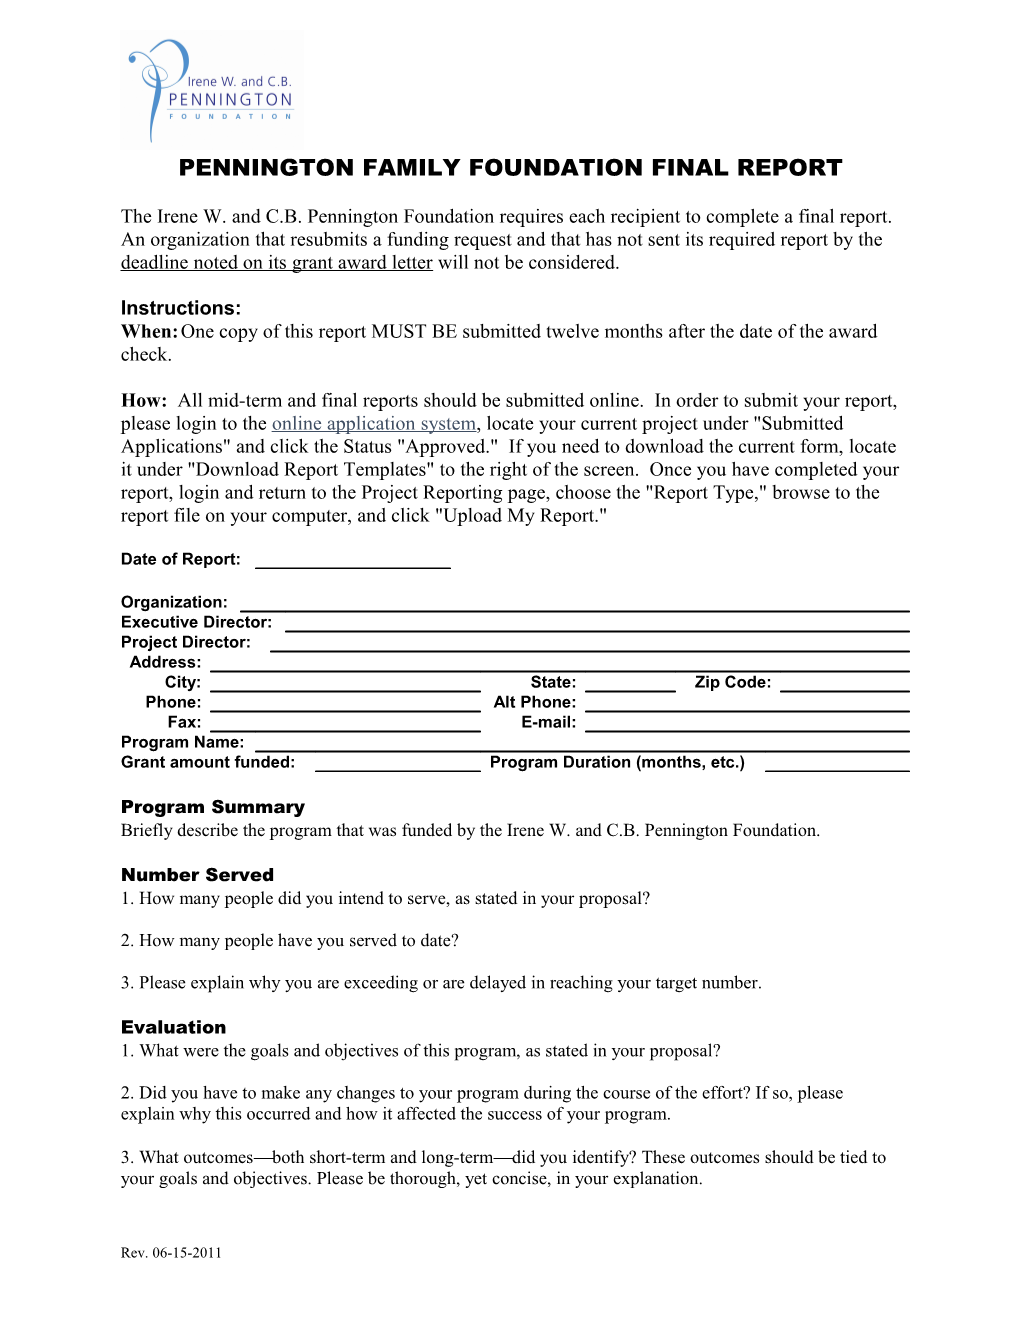 Pennington Family Foundation Final Report